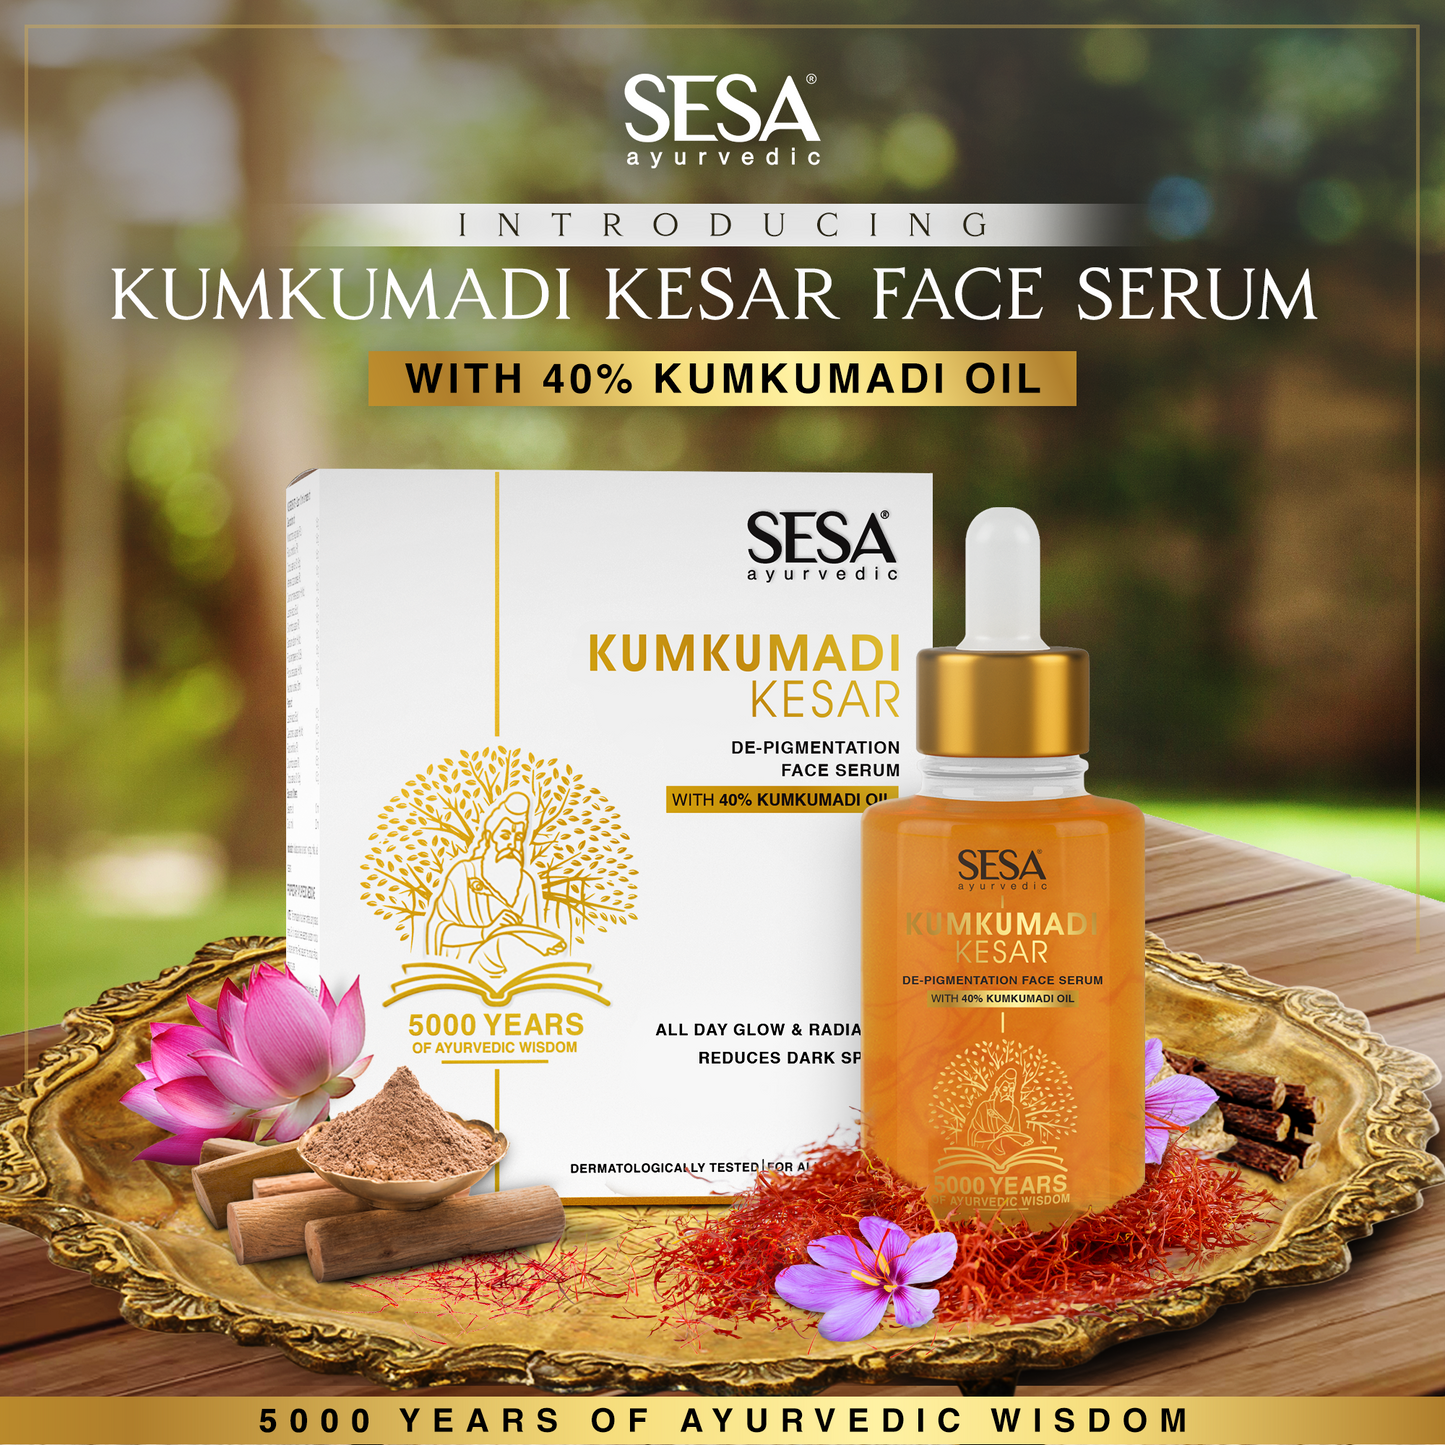 Kumkumadi Face Serum with Kesar for De-Pigmentation